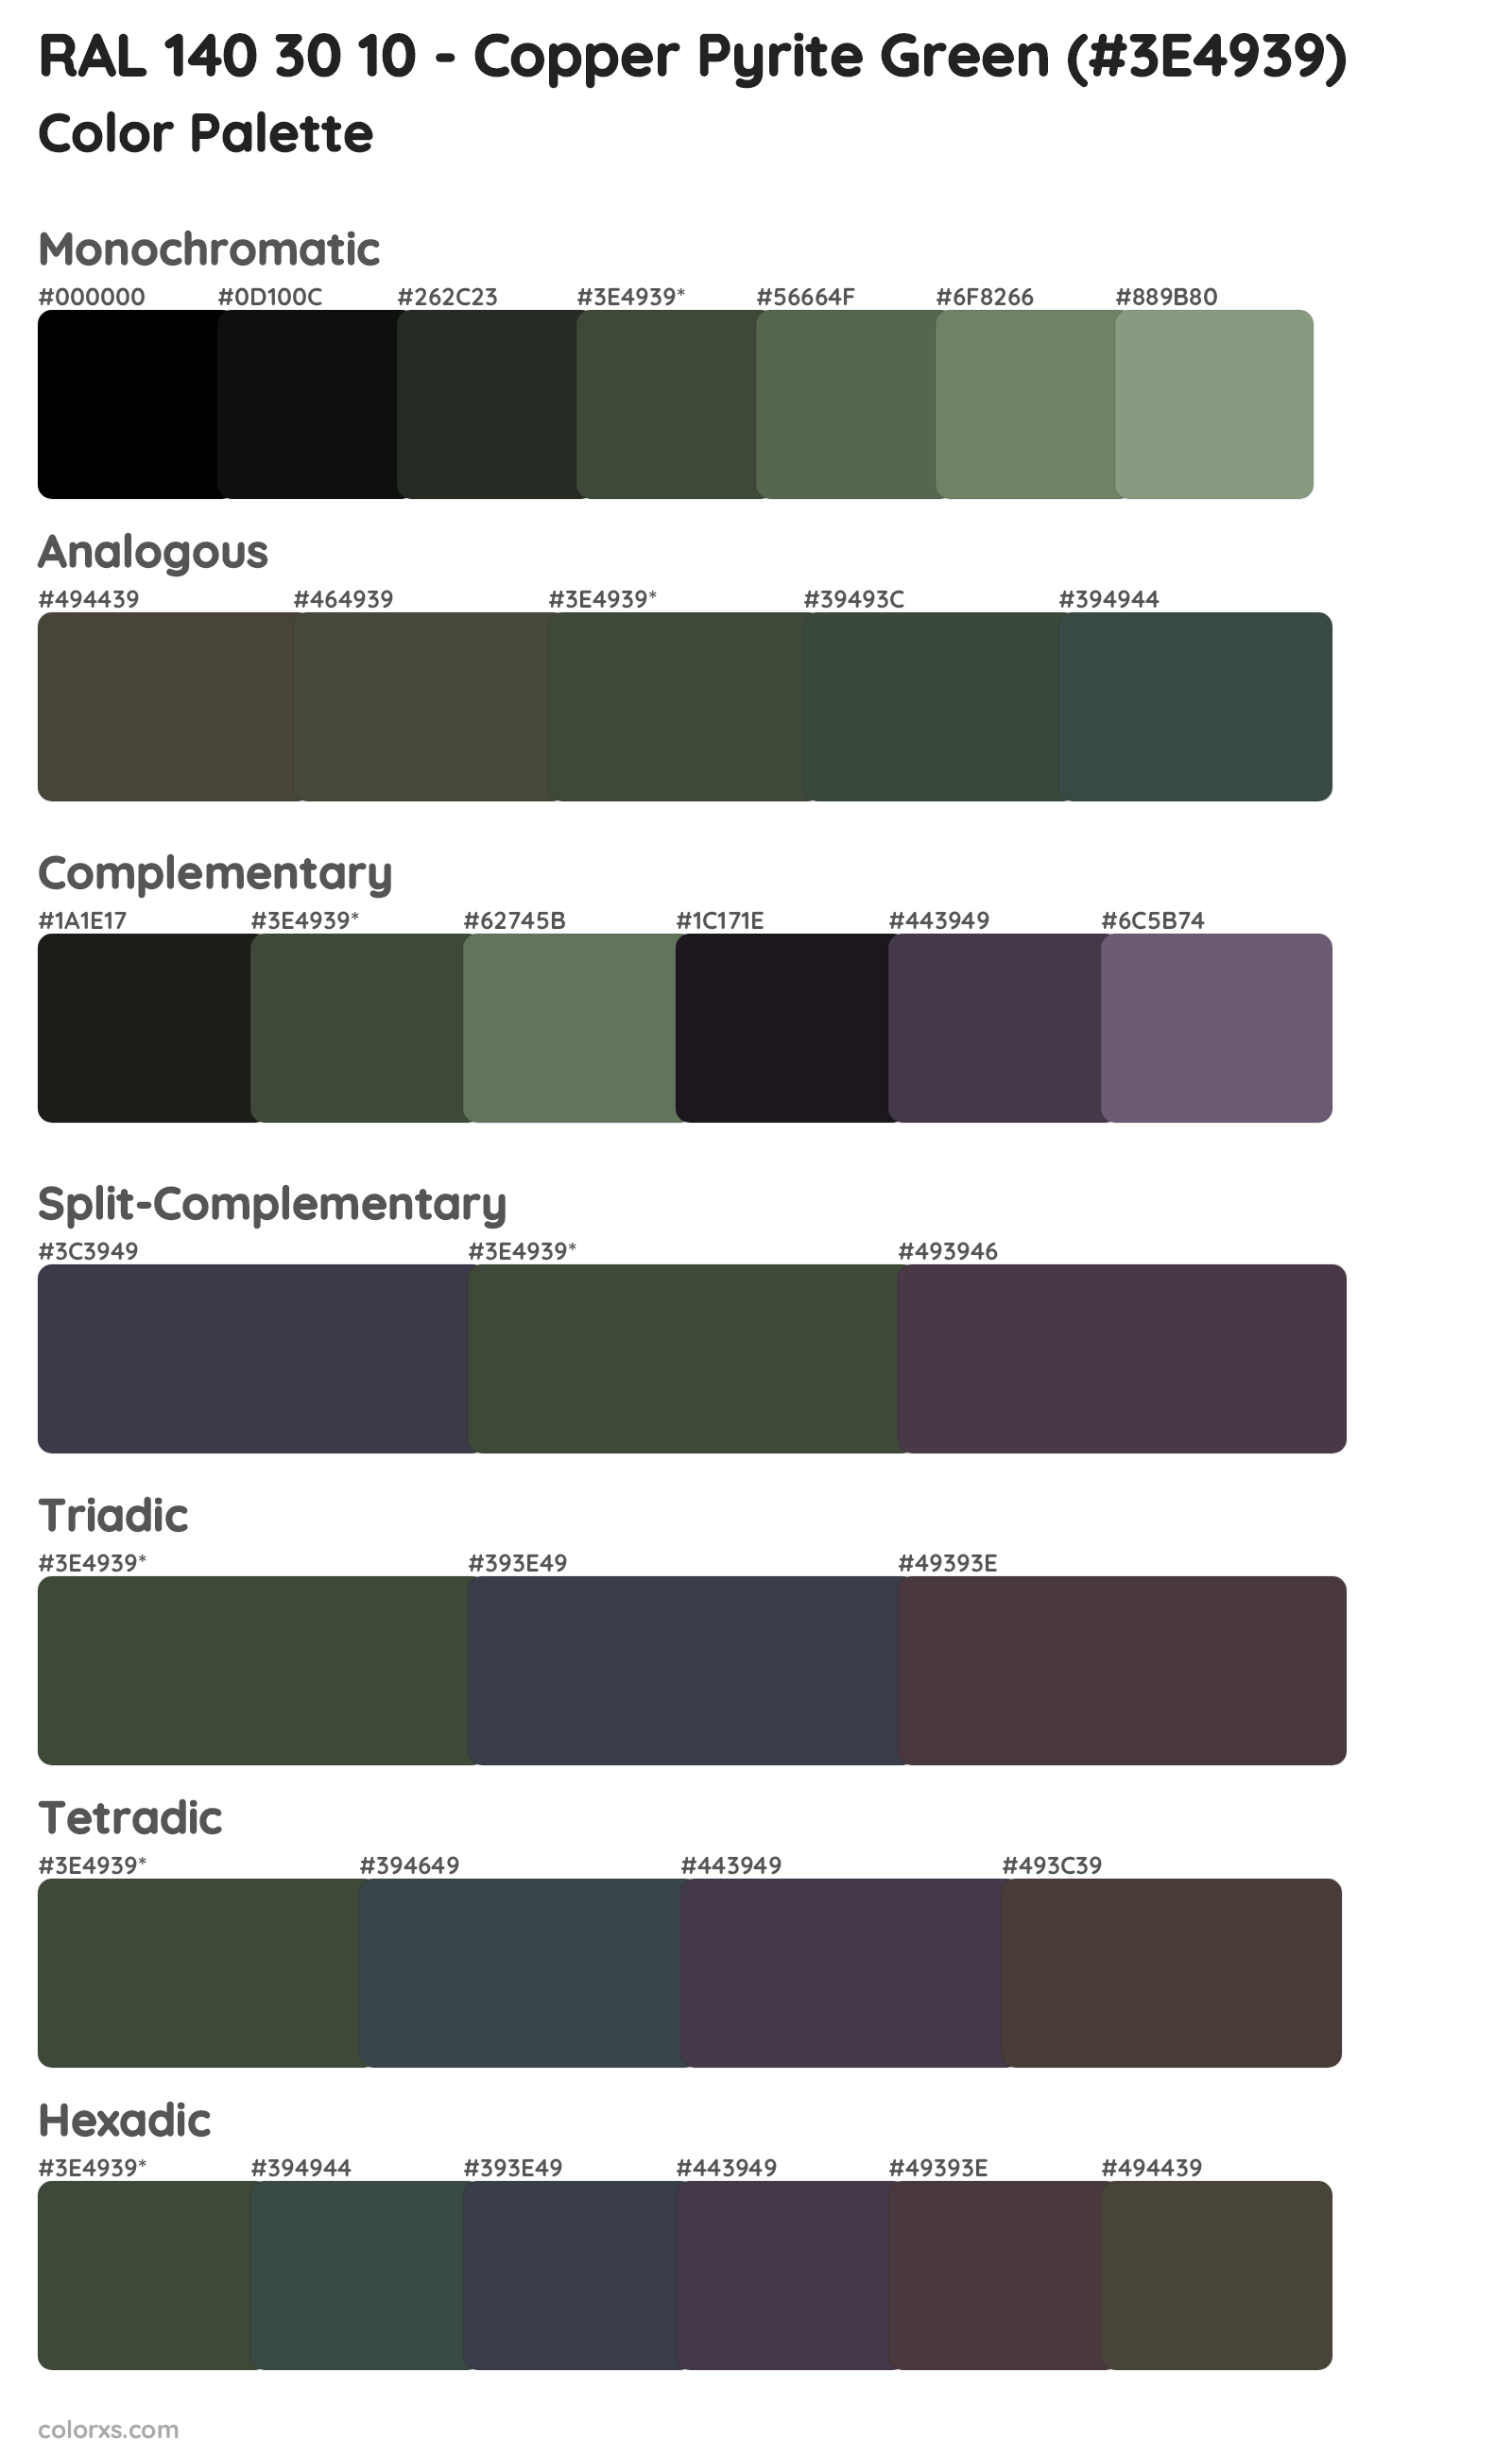 RAL 140 30 10 - Copper Pyrite Green Color Scheme Palettes